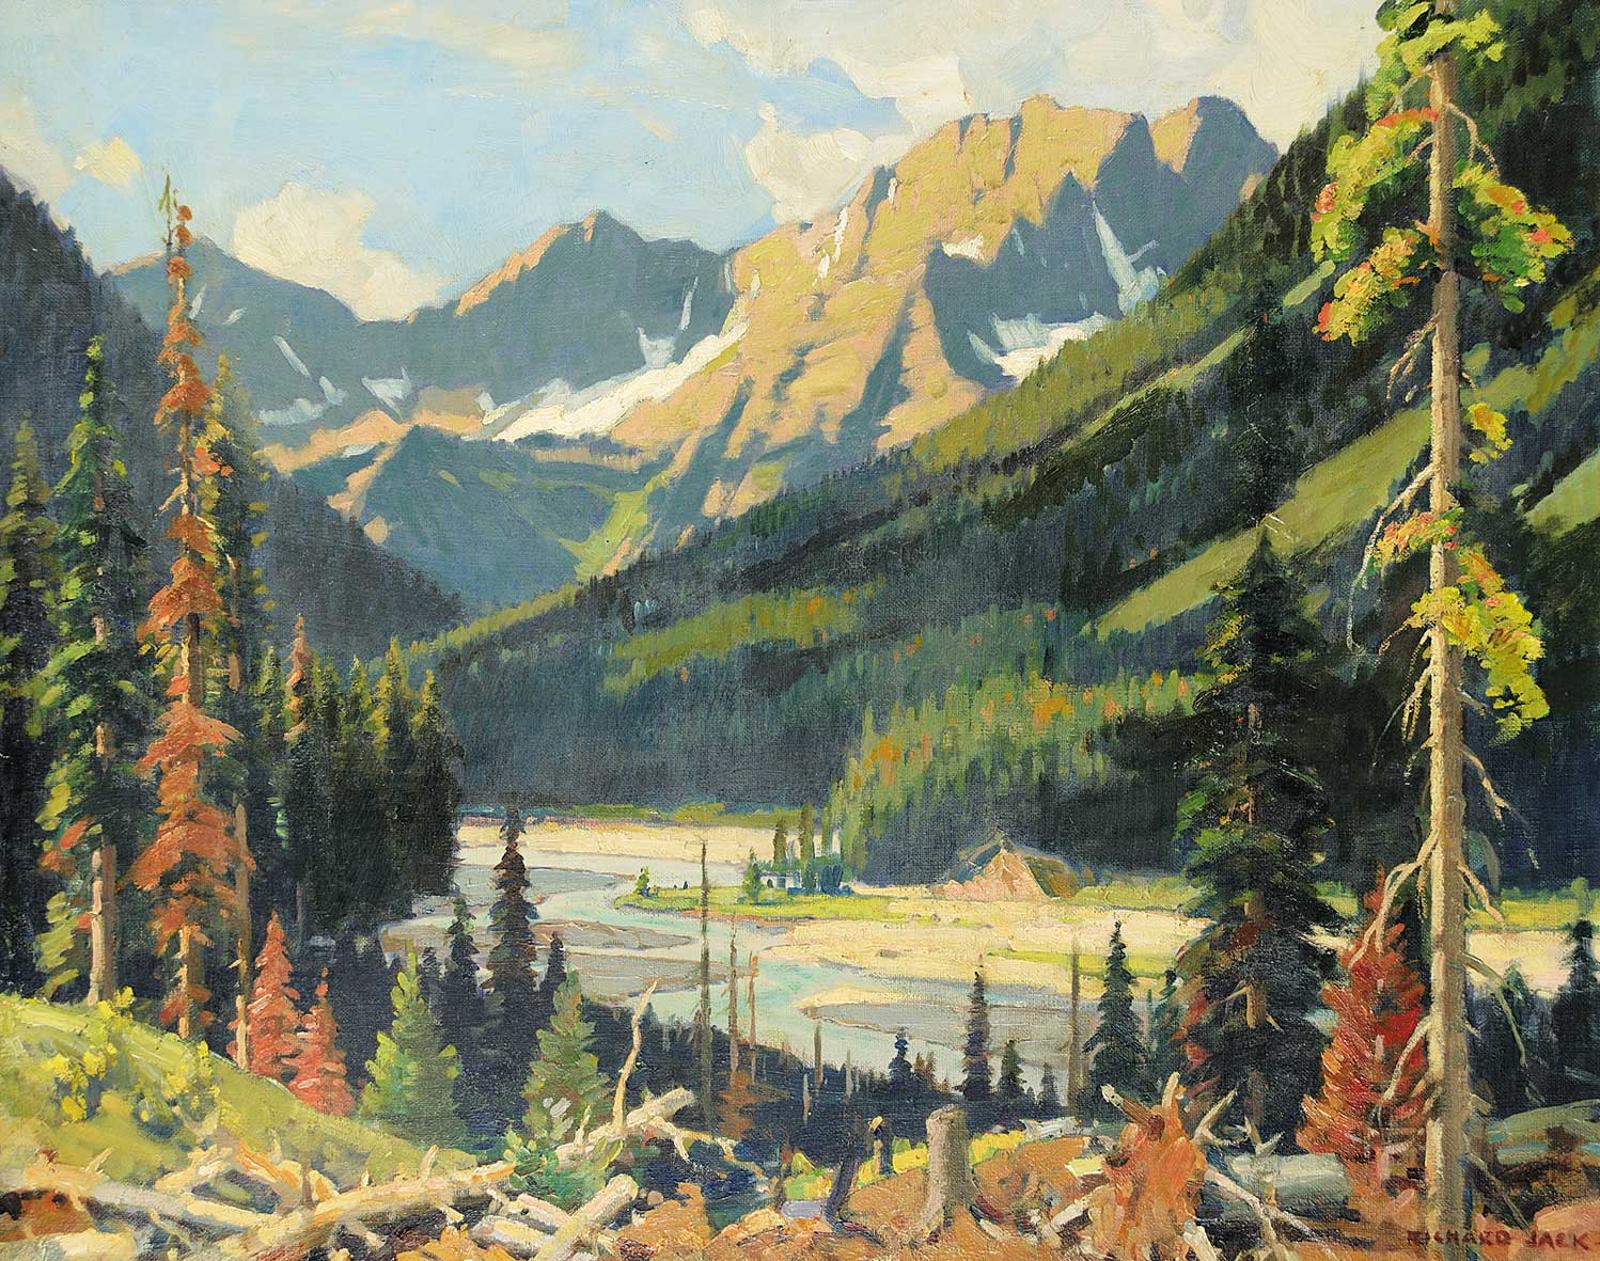 Richard Jack (1866-1952) - Untitled - Mountain Stream